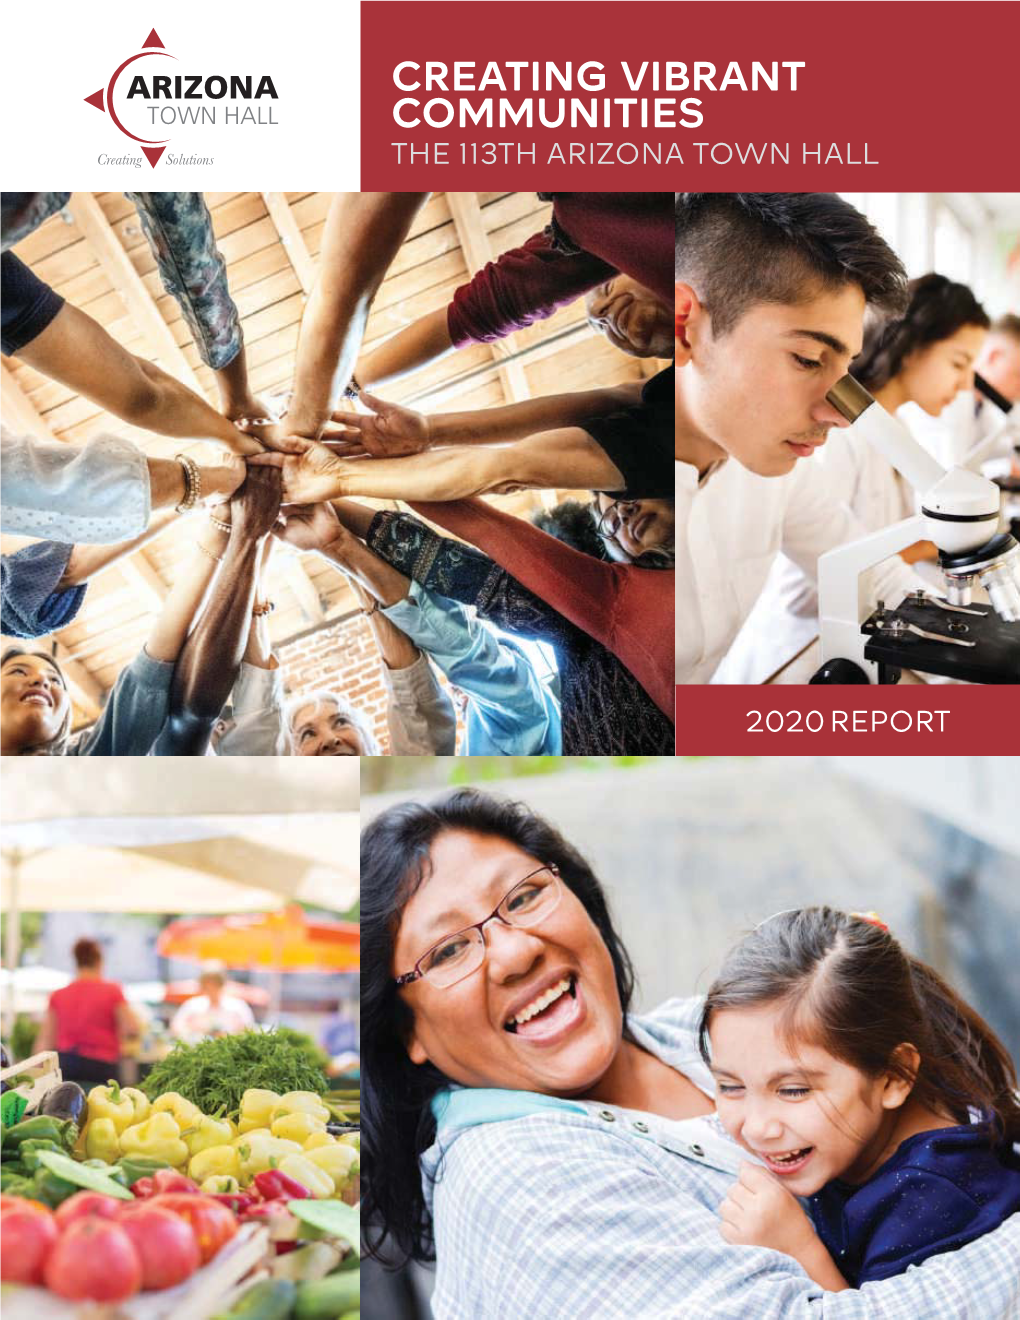 Arizona Town Hall 2020 Report: Creating Vibrant Communities